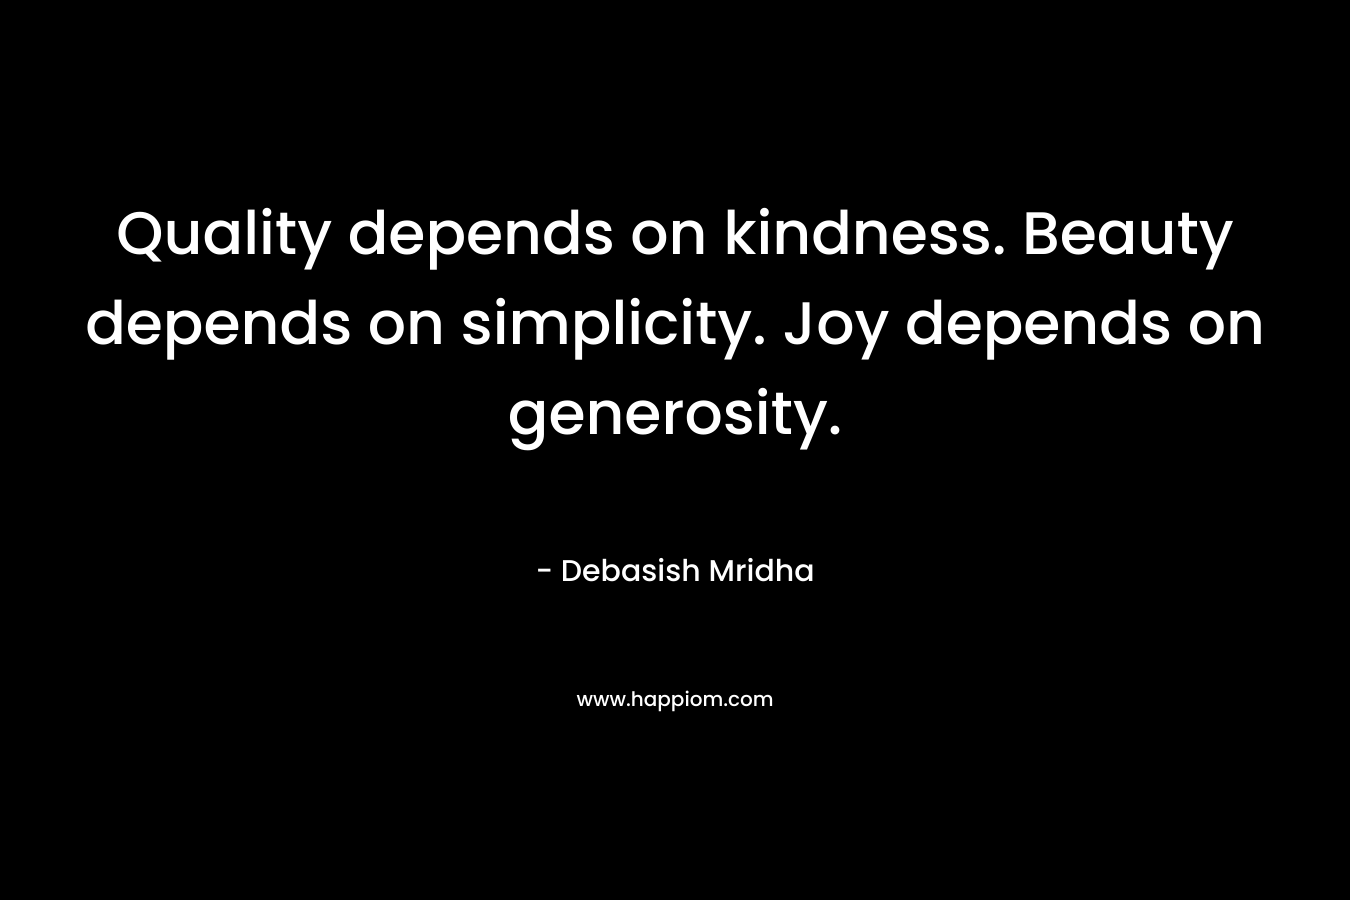 Quality depends on kindness. Beauty depends on simplicity. Joy depends on generosity.